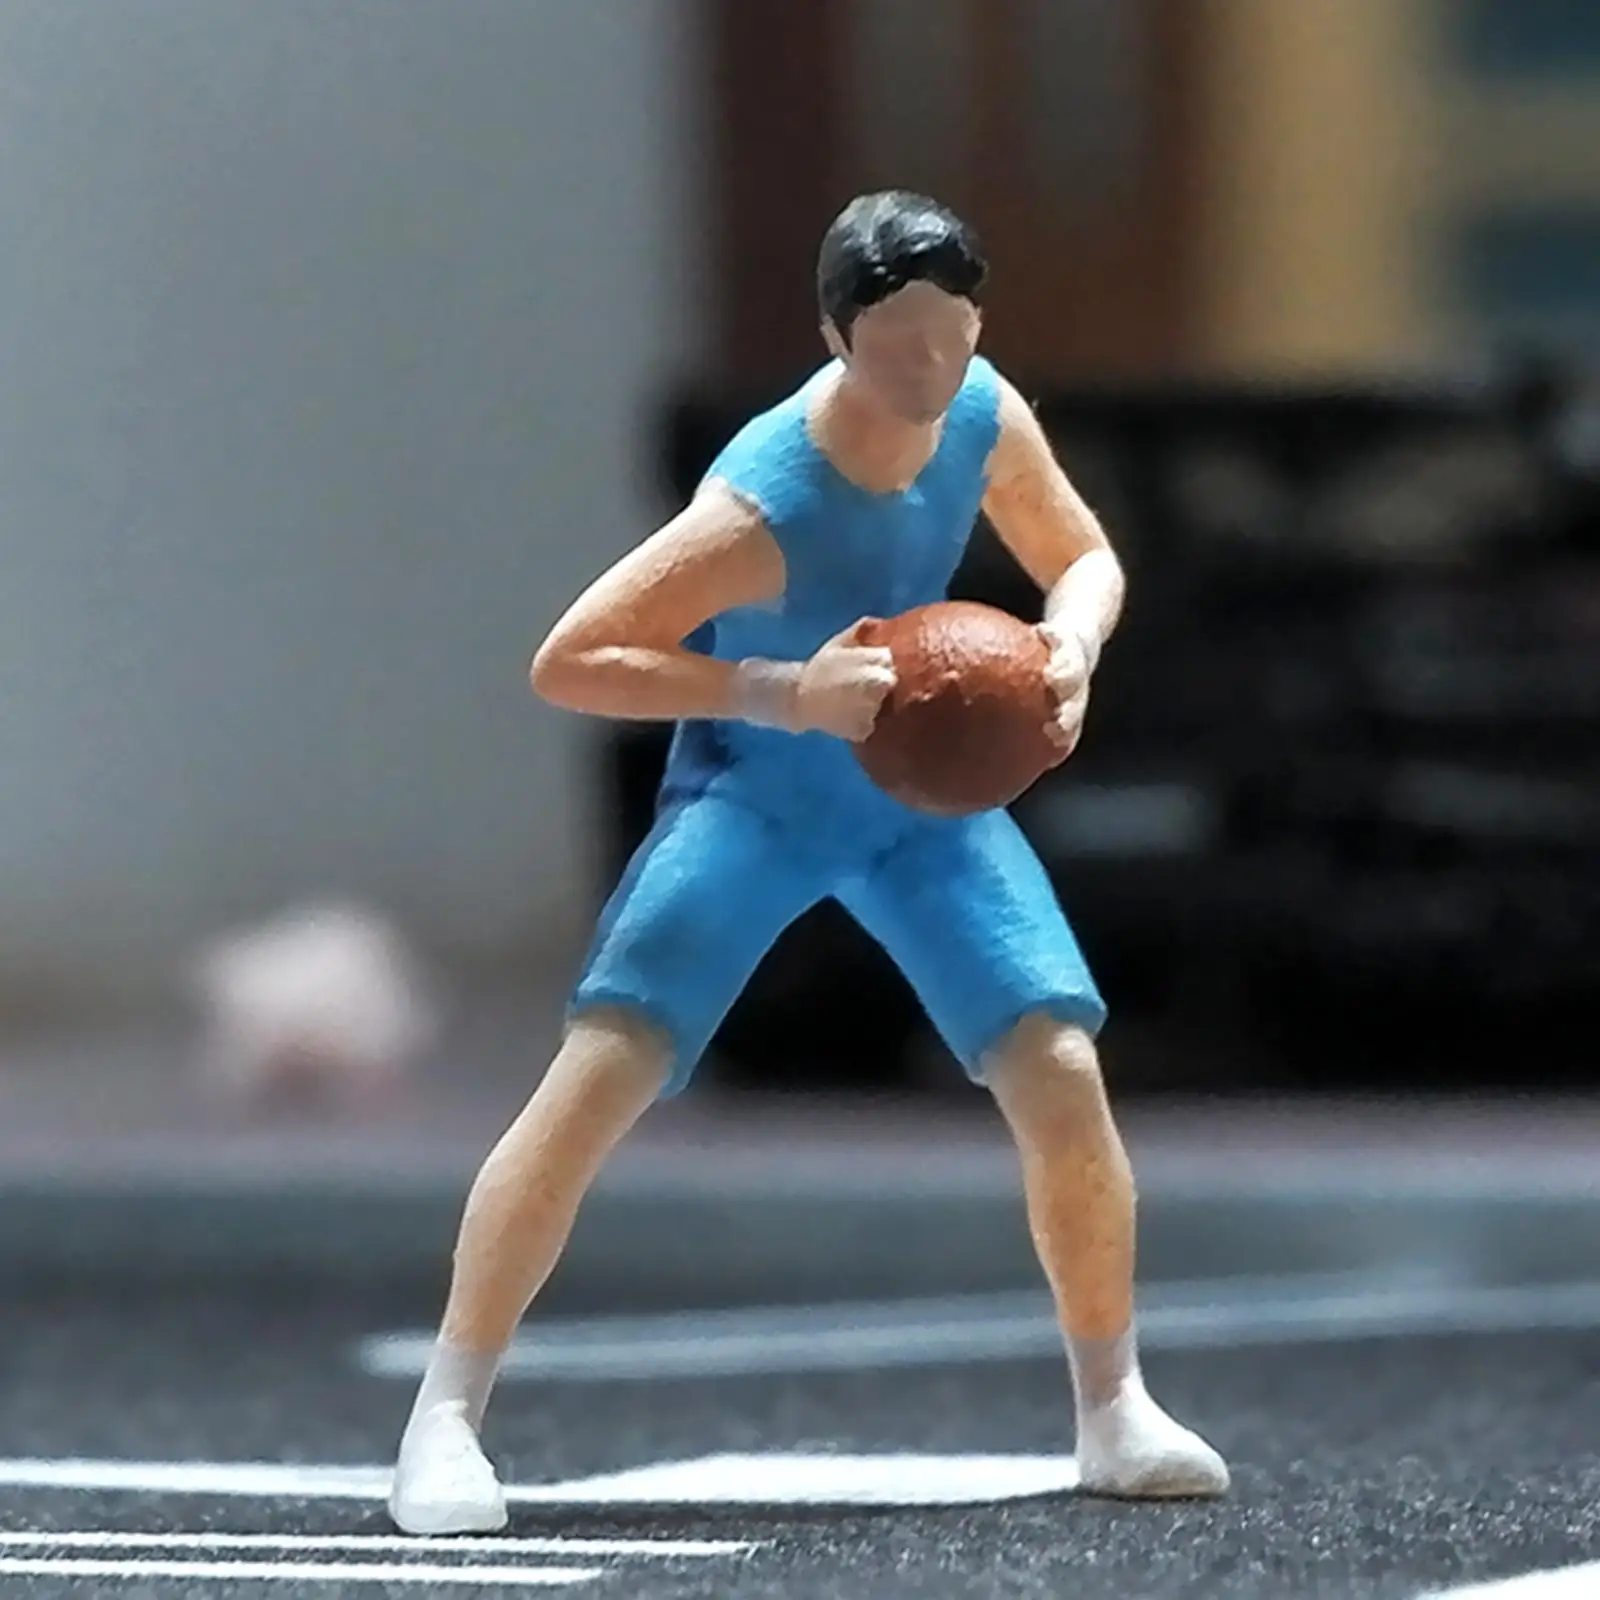 1:64 People Figures Desk Decoration Basketball Boy Figures for Miniature Scene Diorama Dollhouse Photography Props Decoration